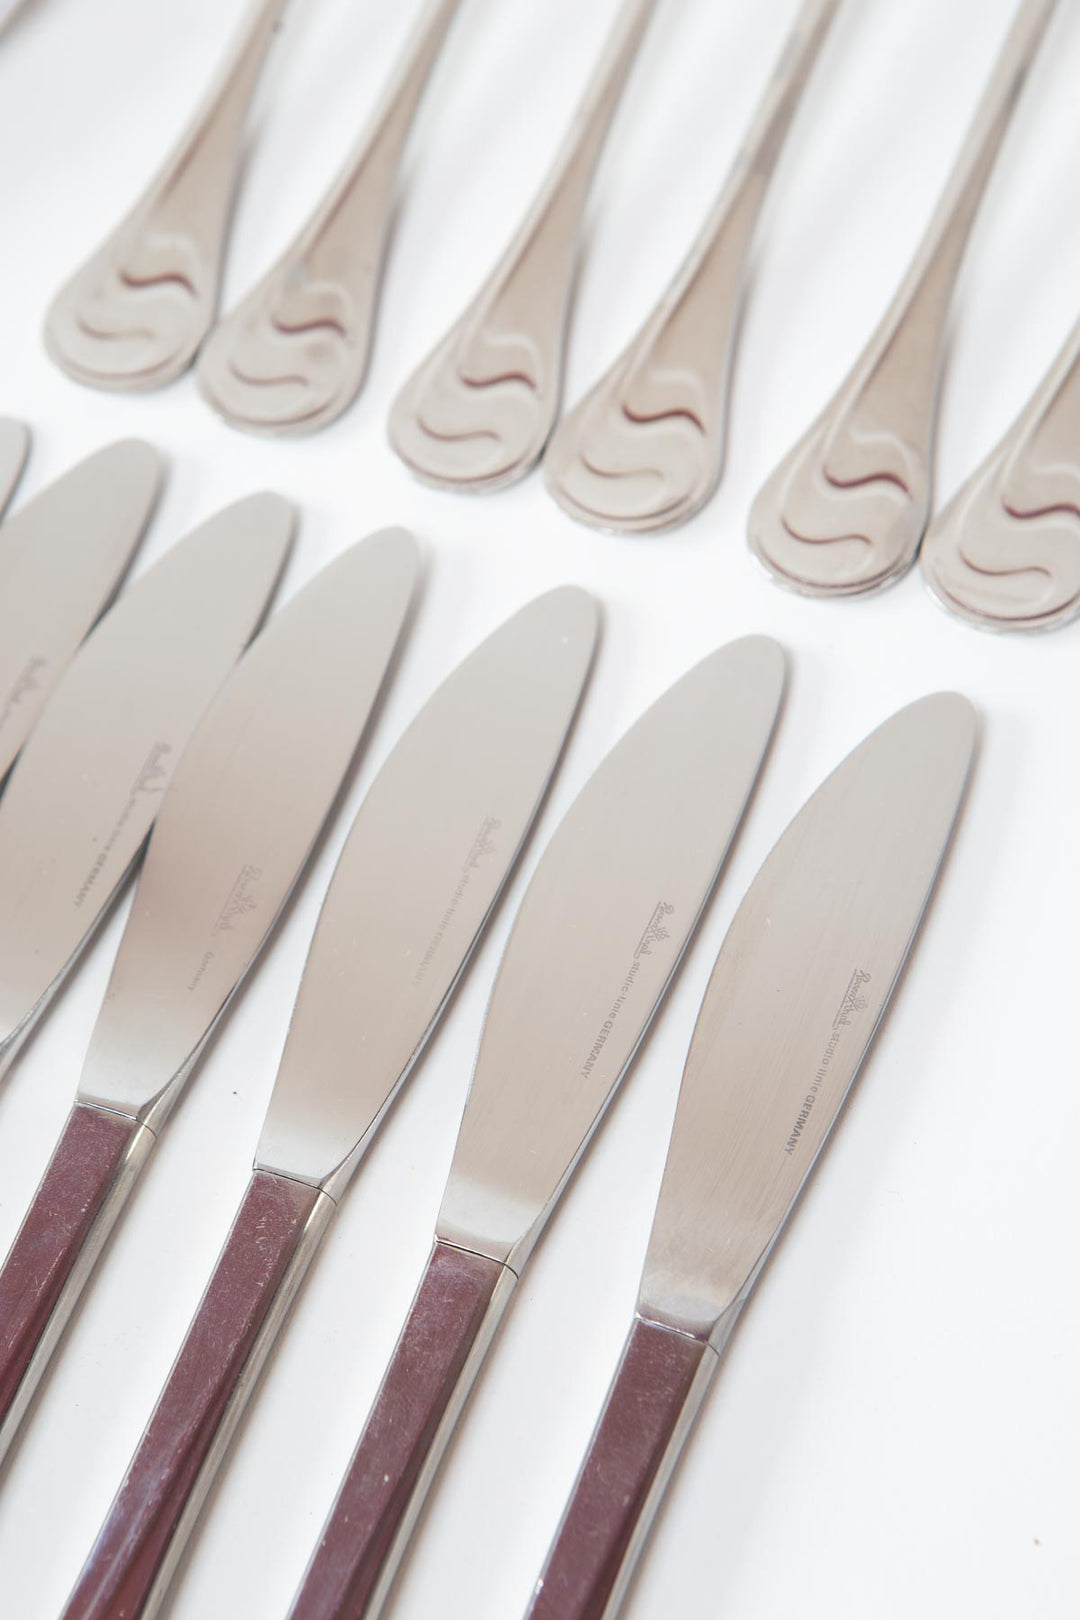 Cubiertos Rosenthal Studio modelo Asymmetria cutlery flatware 